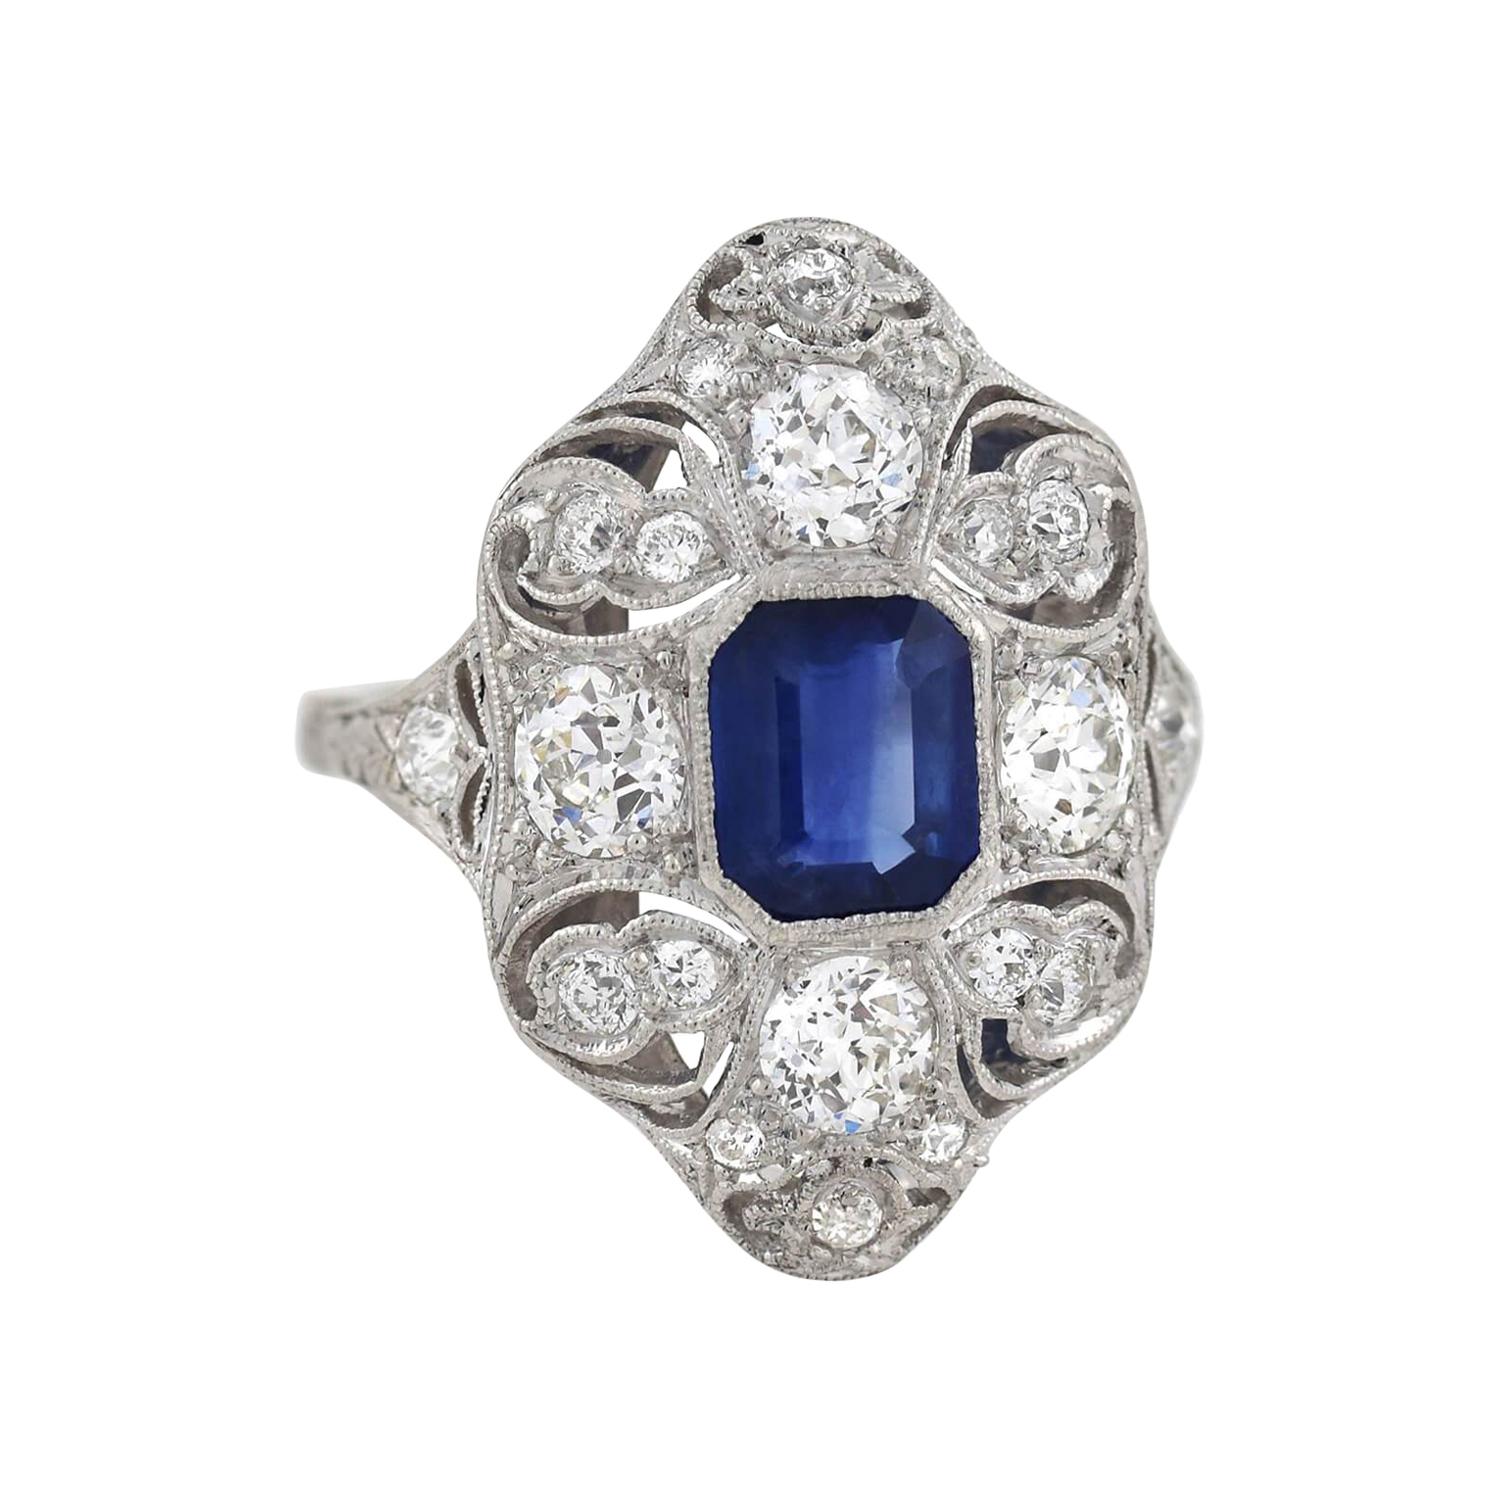 Edwardian 1.40 Carat Sapphire and Diamond Filigree Ring